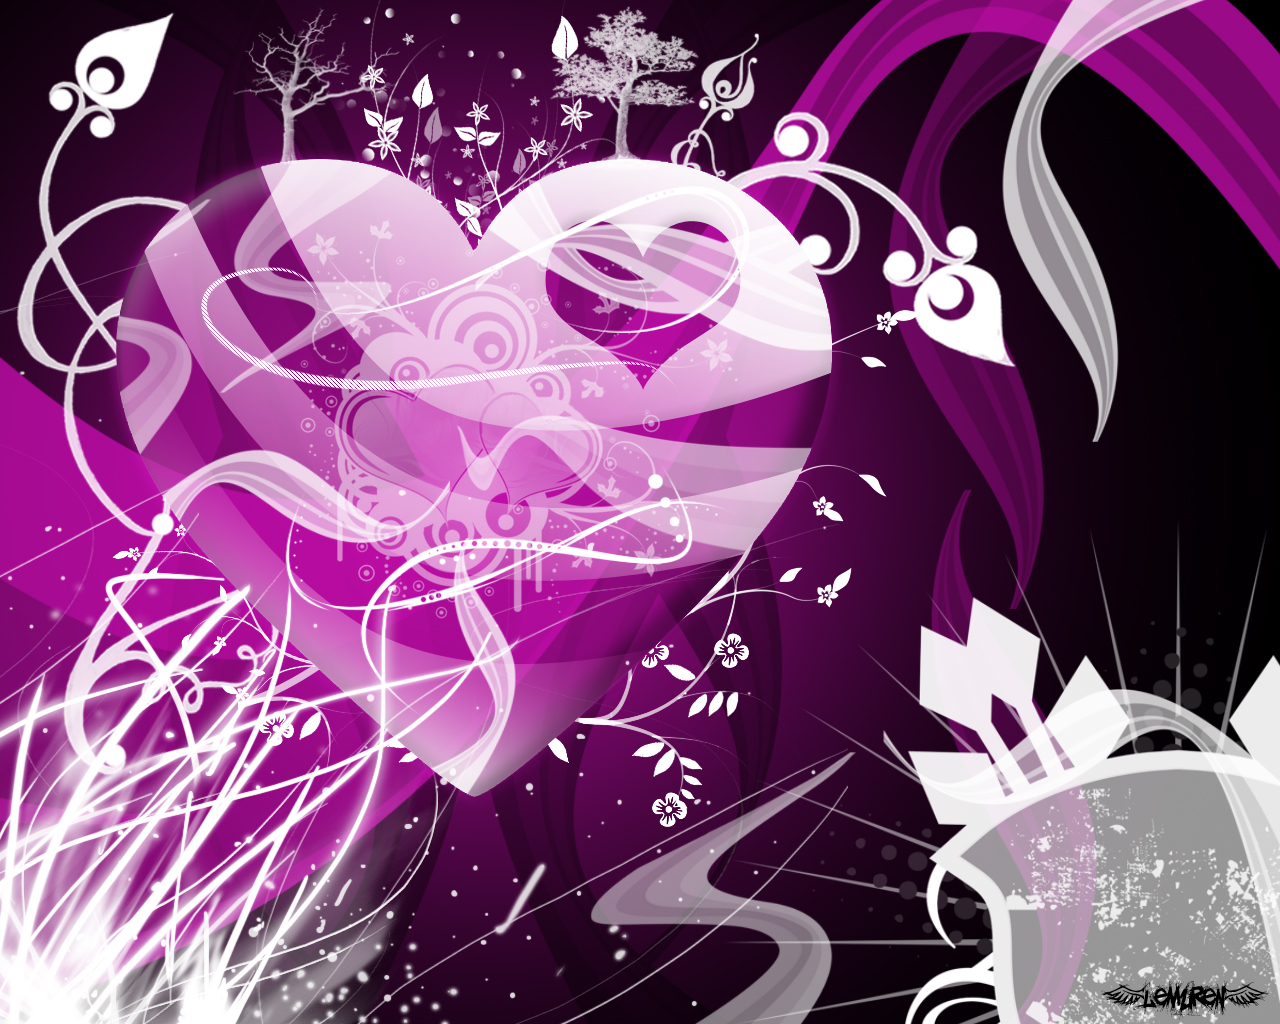 http://1.bp.blogspot.com/-q6wVpriSr44/T0V_4sxEb1I/AAAAAAAADdk/S9-oSLLuHz4/s1600/Purple_Heart_by_LemurenSwe.jpg